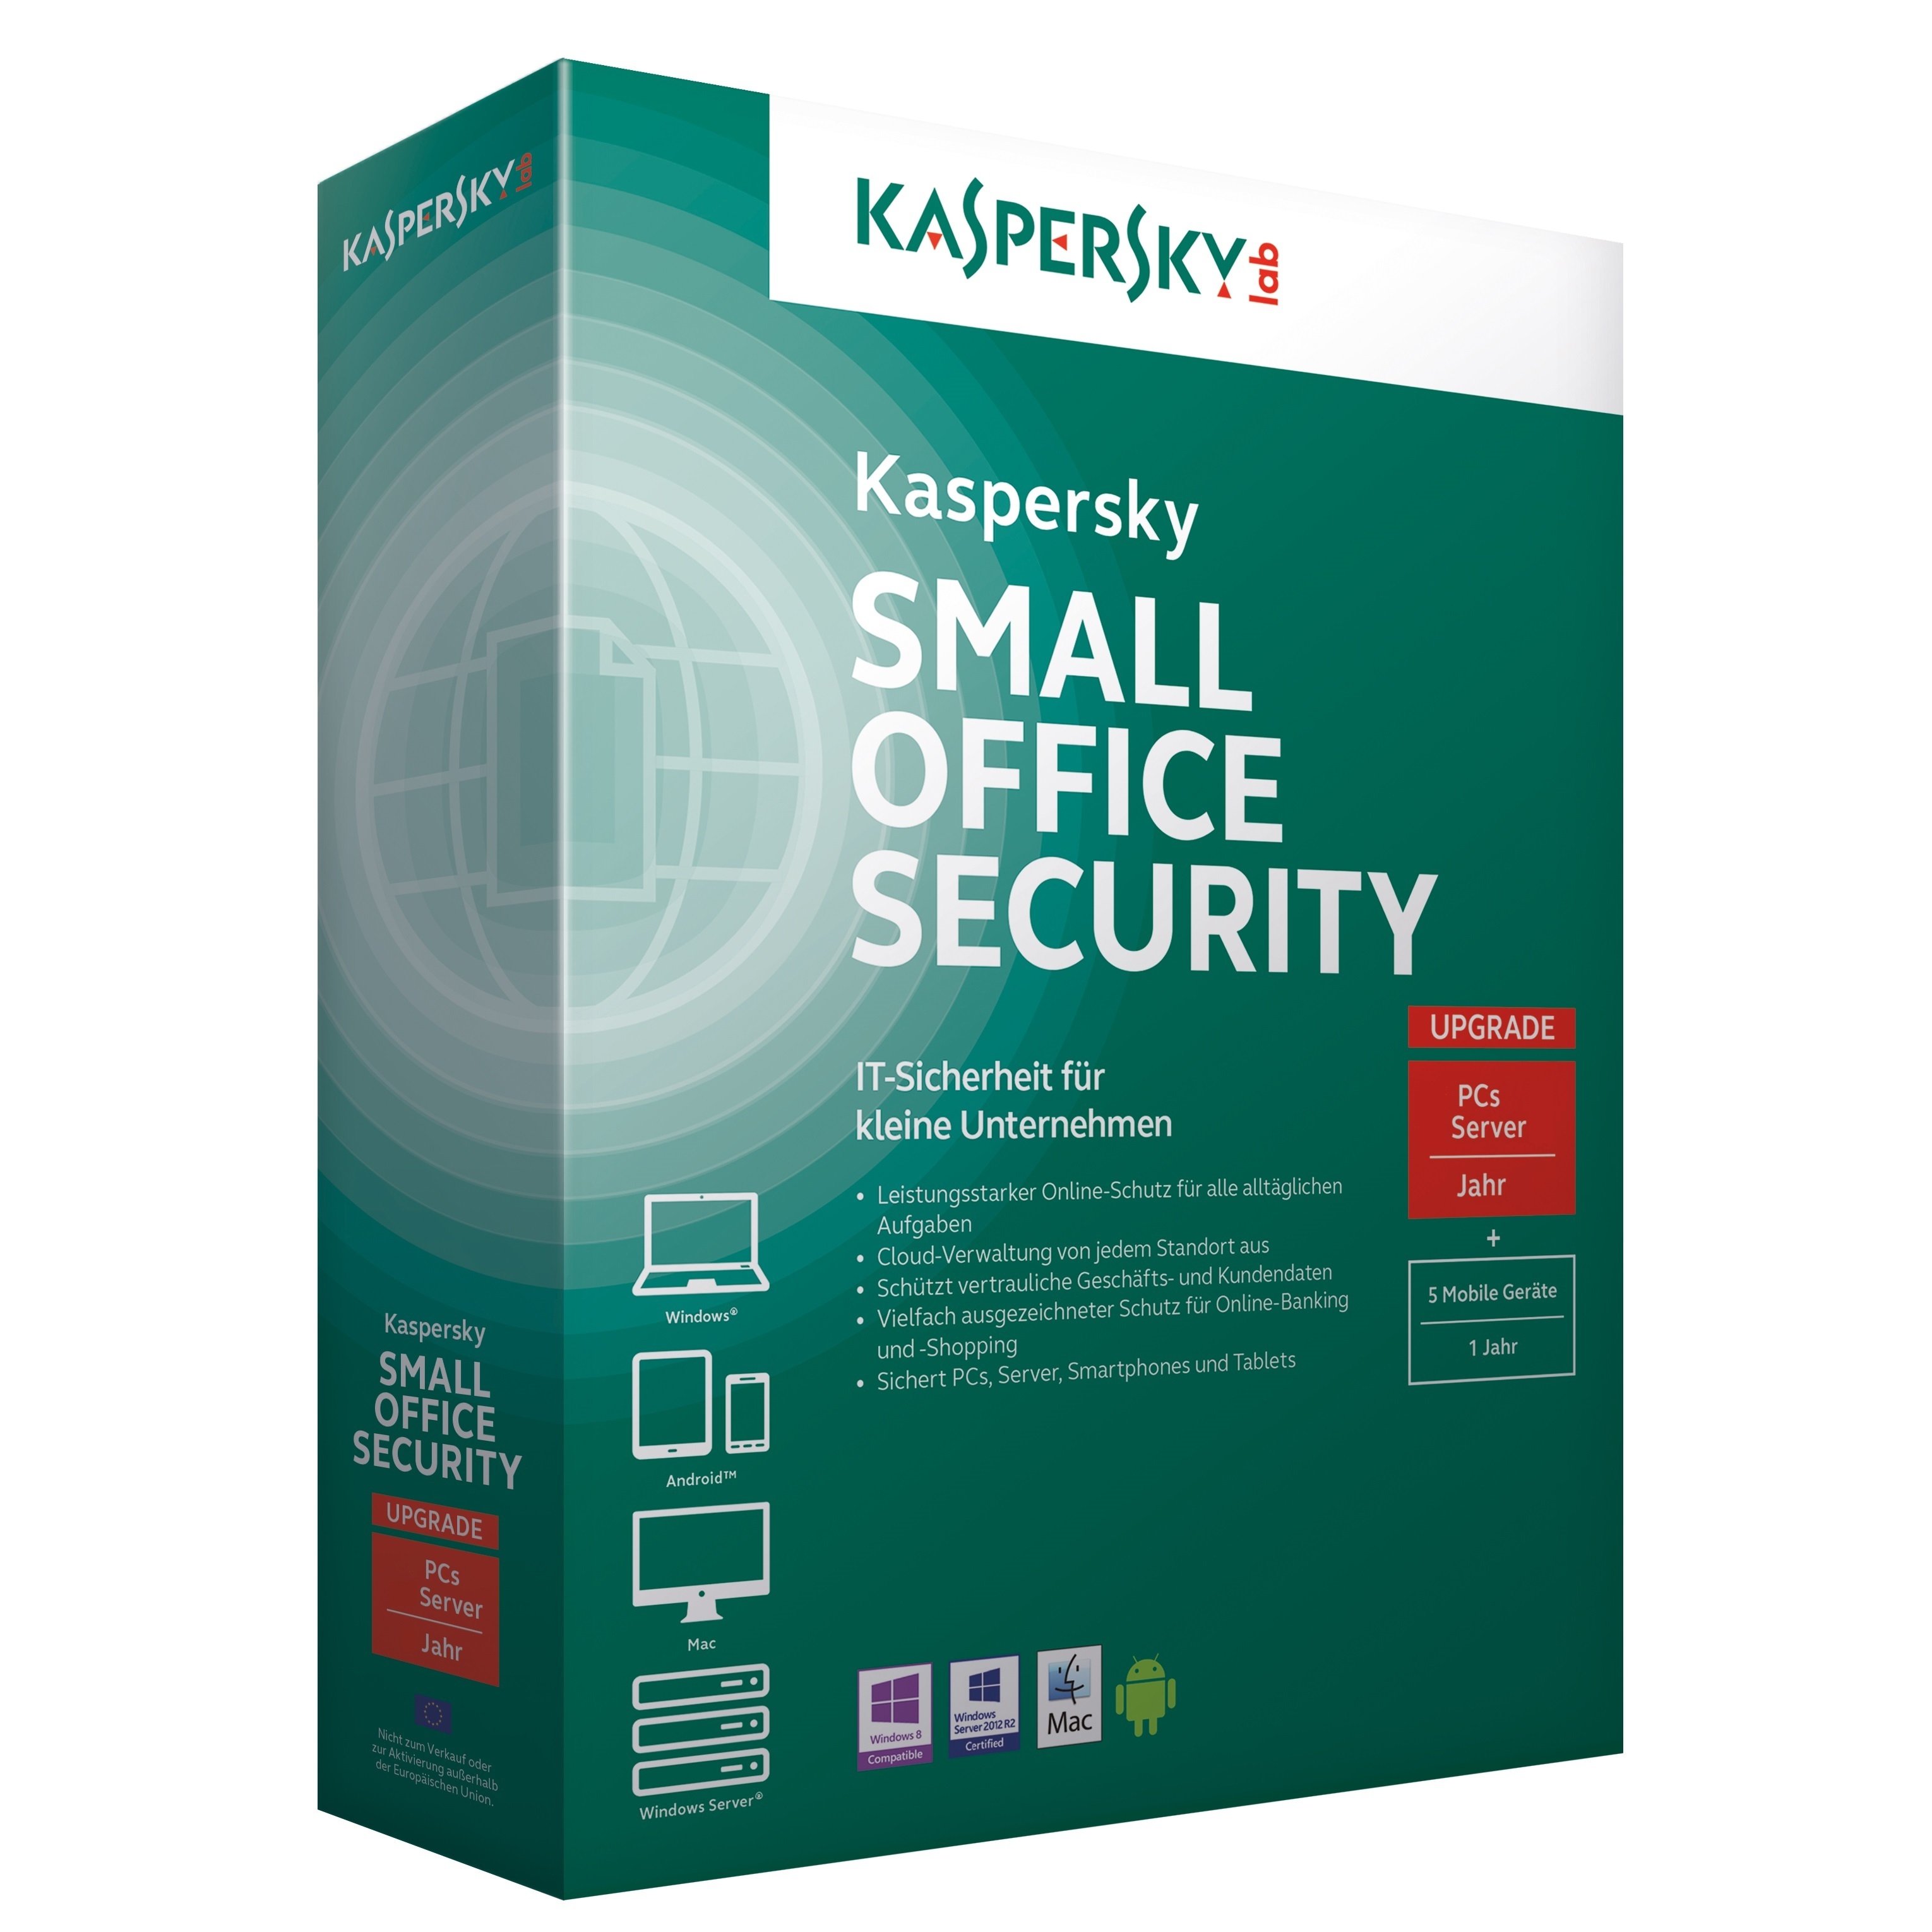 Kaspersky Internet Security 2017 Key Generator